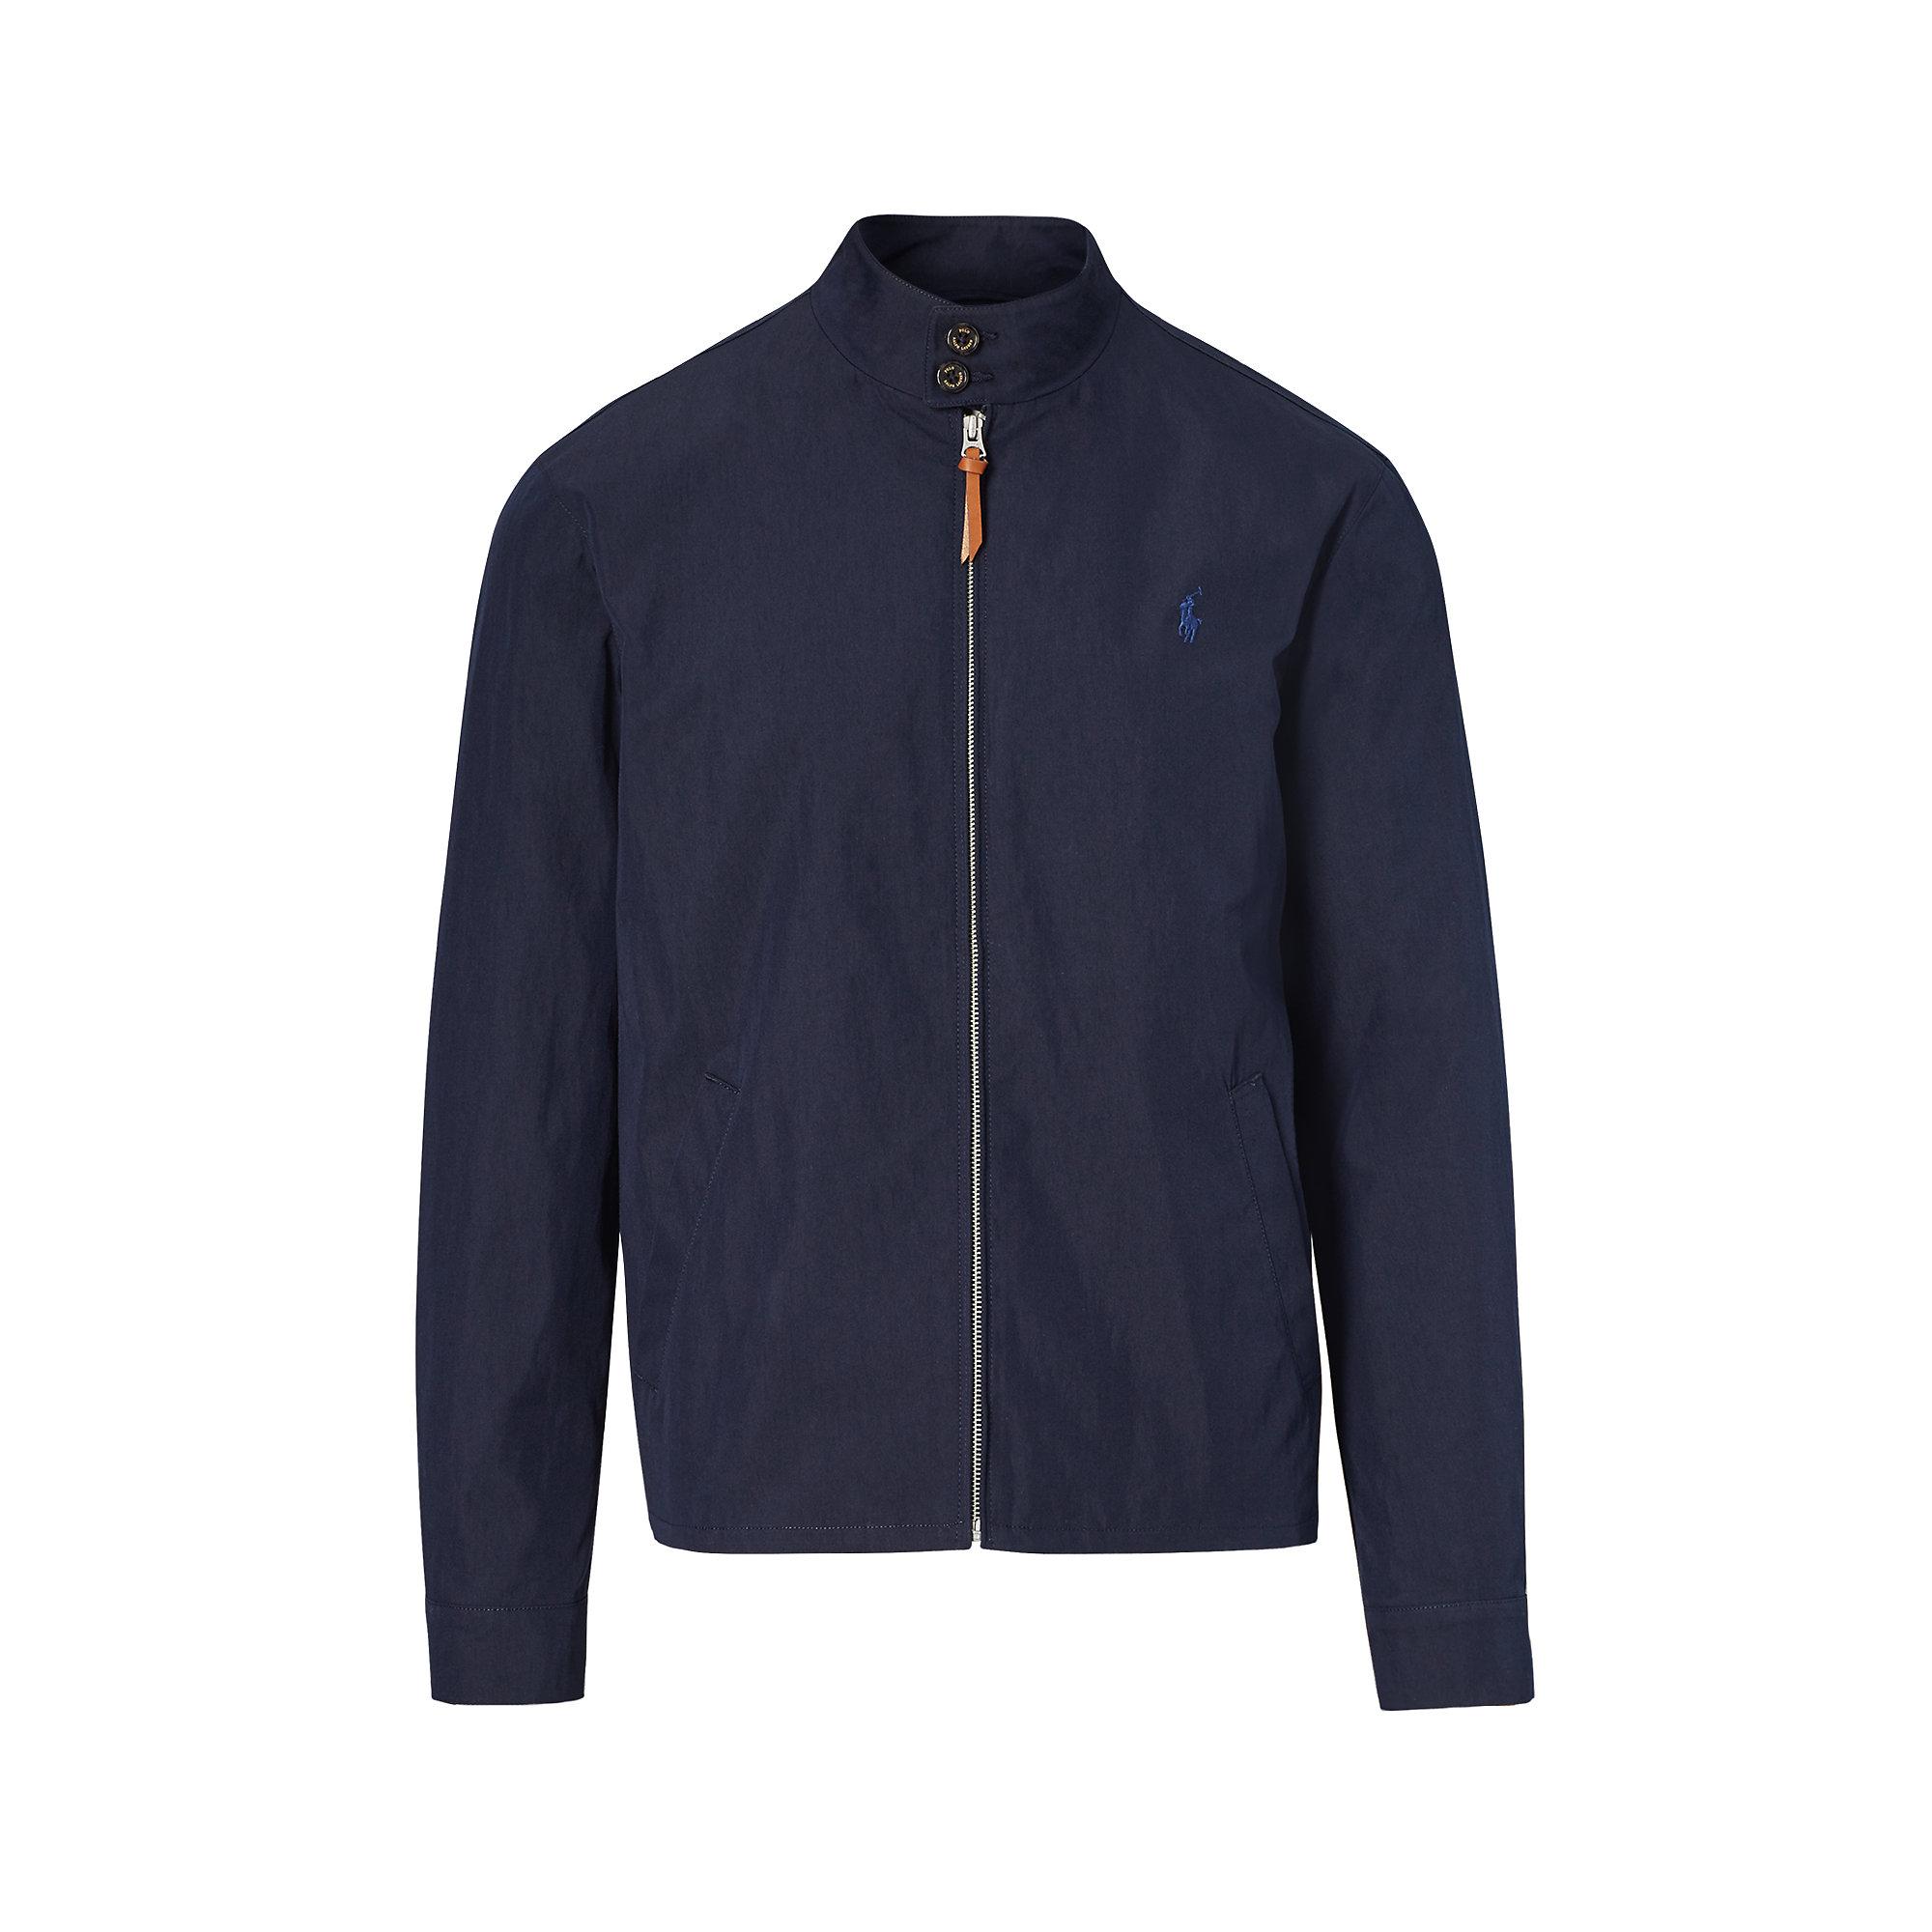 Lyst - Polo Ralph Lauren Water-repellent Twill Jacket in Blue for Men